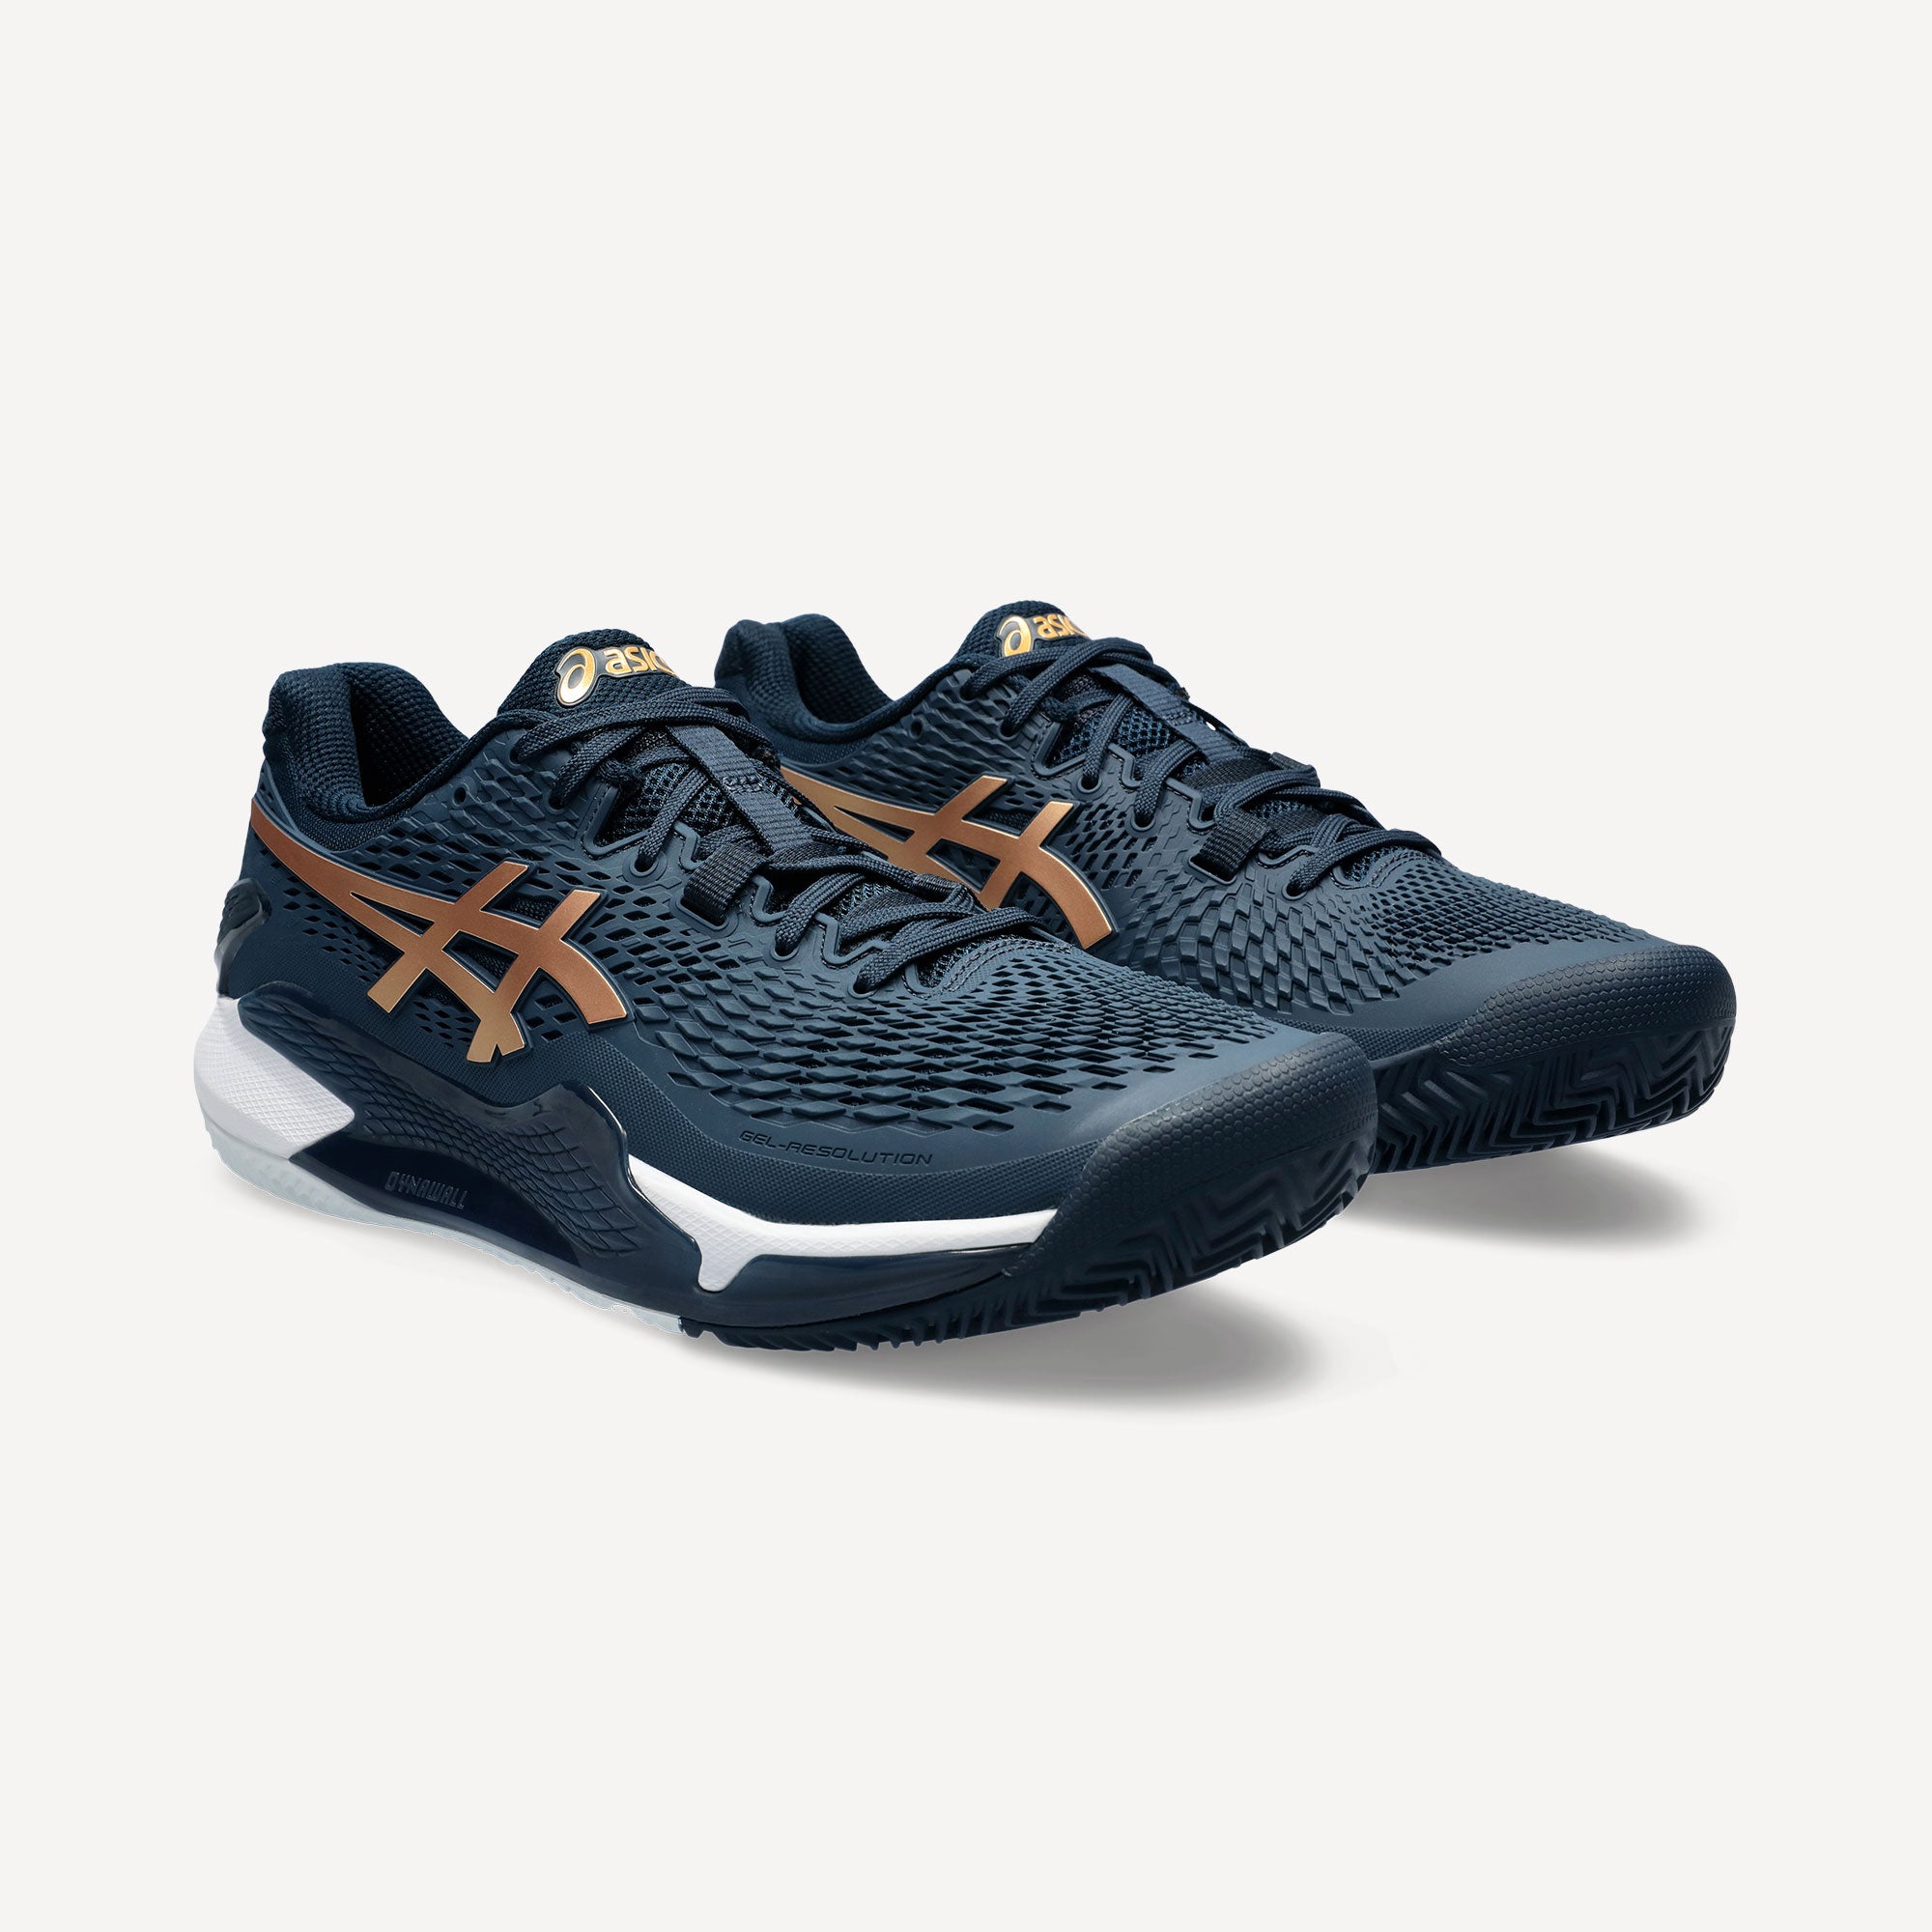 ASICS Gel-Resolution 9 Men's Clay Court Tennis Shoes - Blue (4)